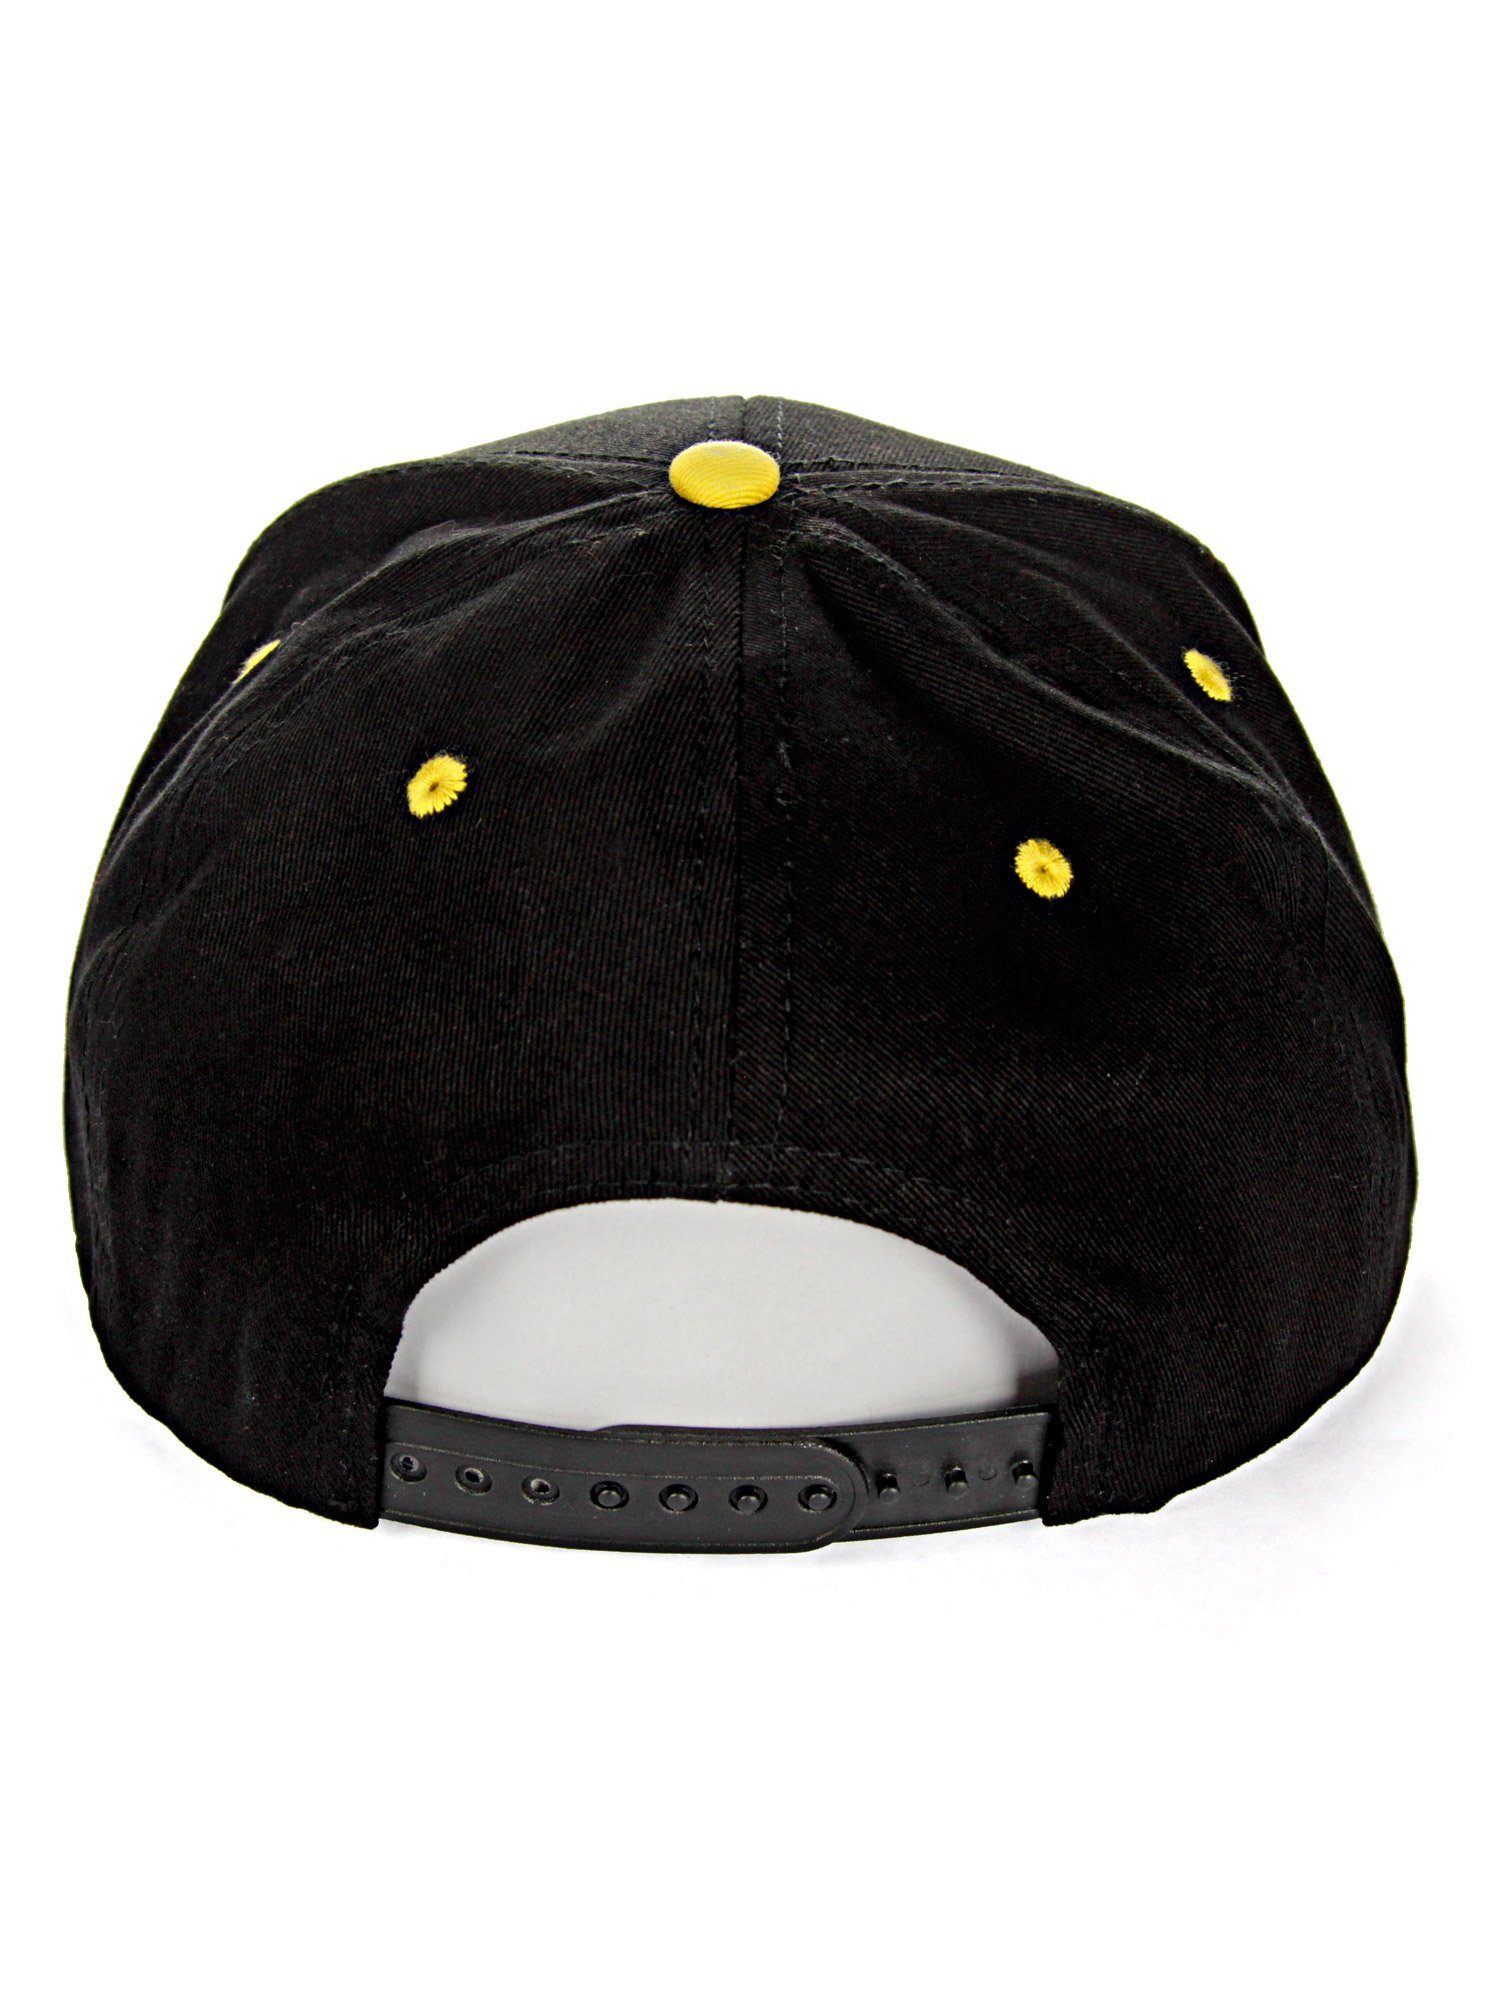 RedBridge Baseball Lancaster schwarz-gelb Schirm mit kontrastfarbigem Cap